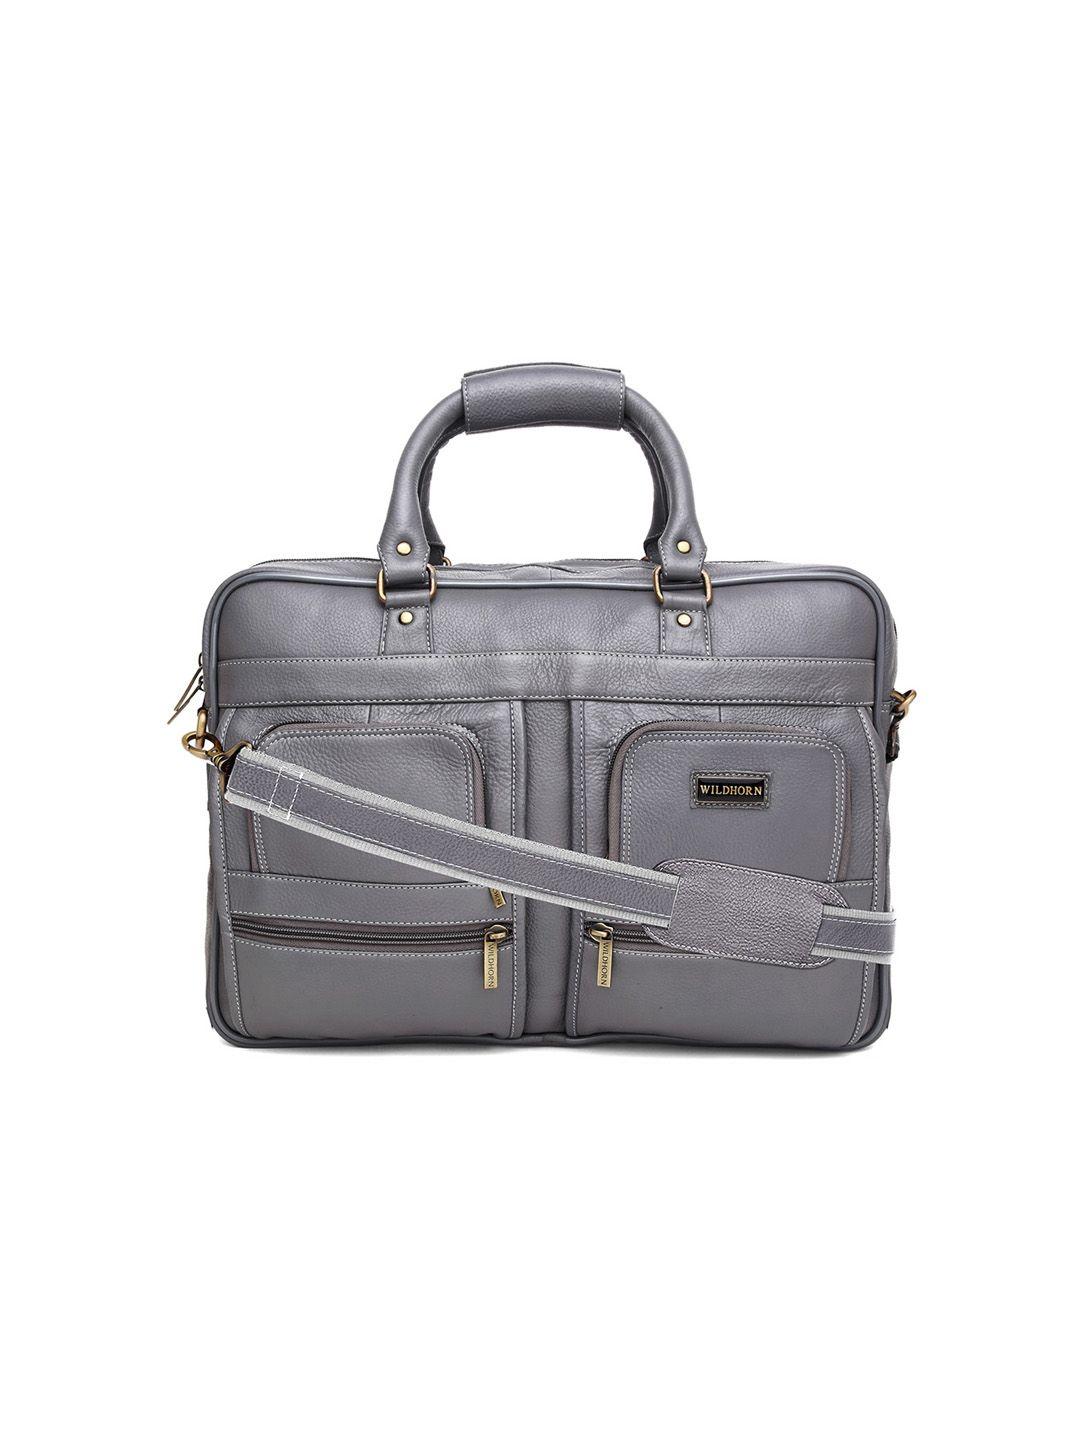 wildhorn men grey textured leather laptop bag